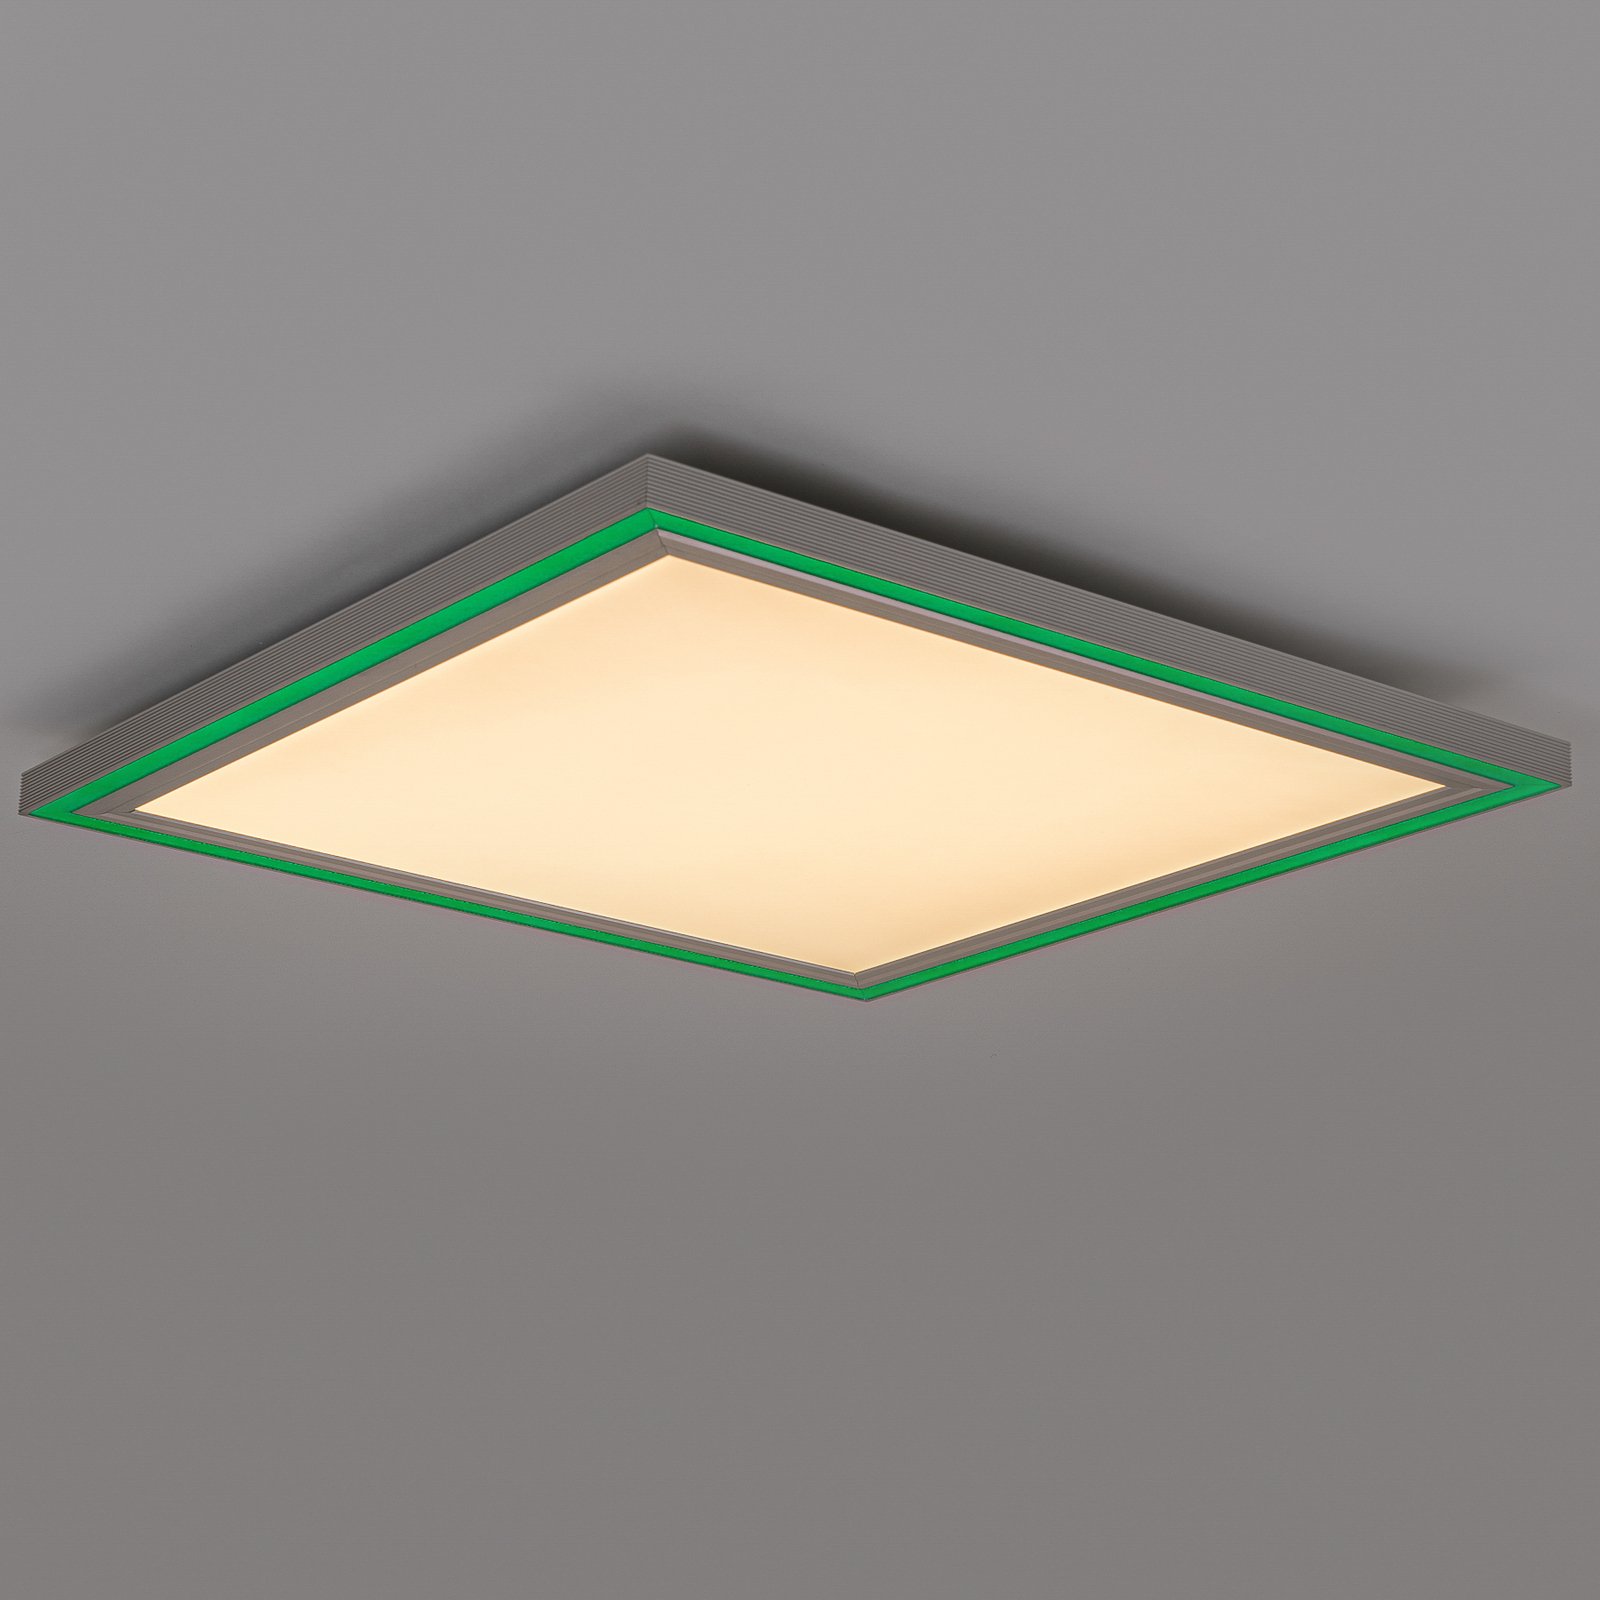 Lucande Melistro plafonnier LED, RVB, angulaire